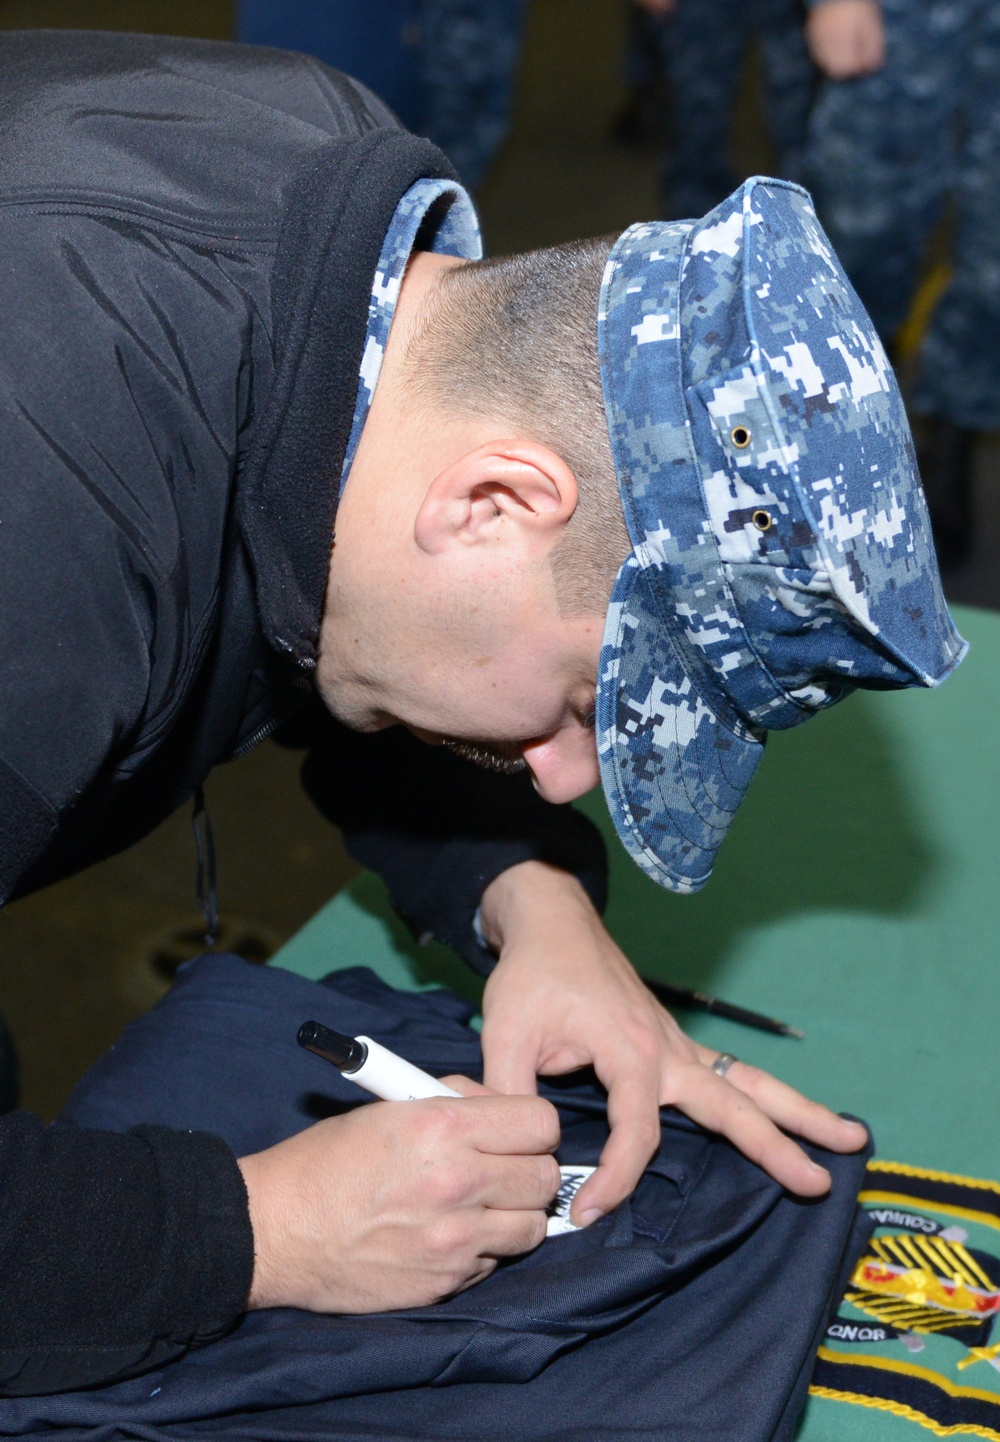 USS Bataan sailors receive new flame-resistant coveralls